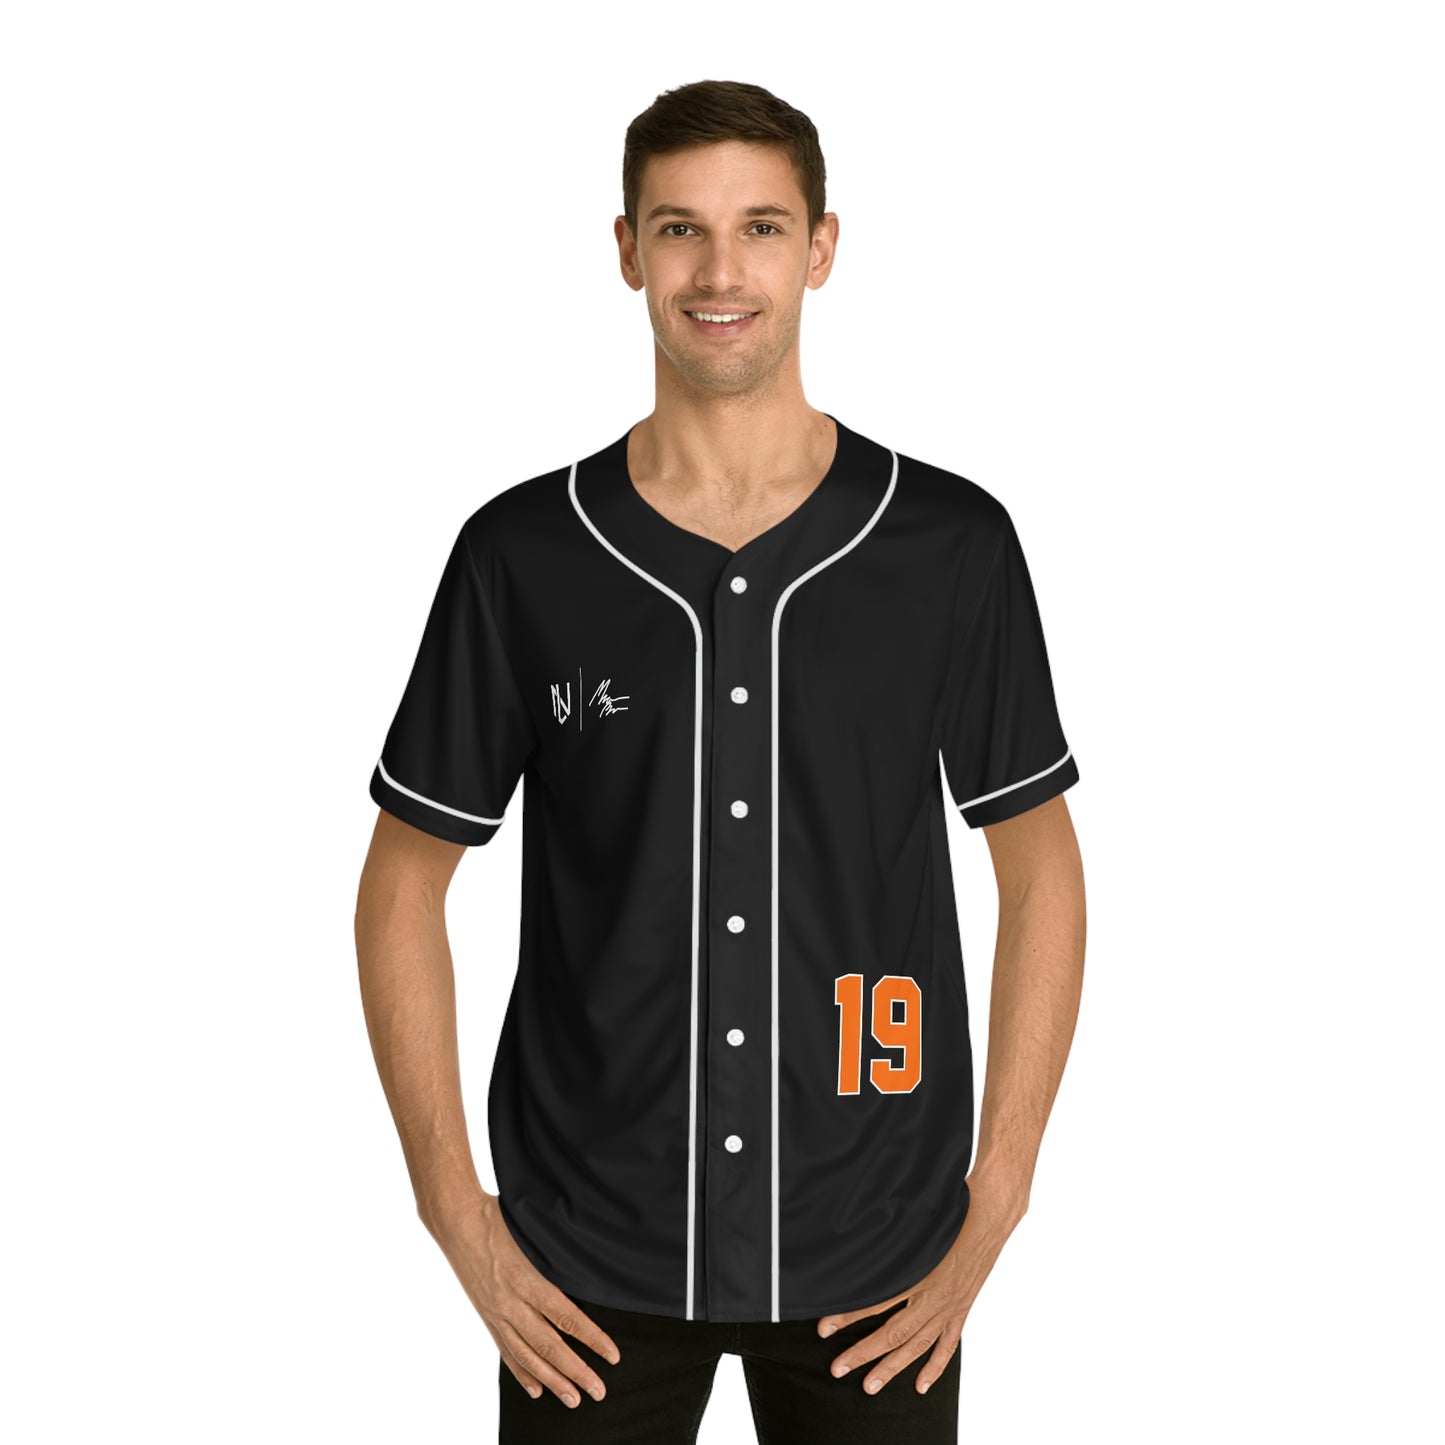 Marcus Brown Baseball Jersey (Black)